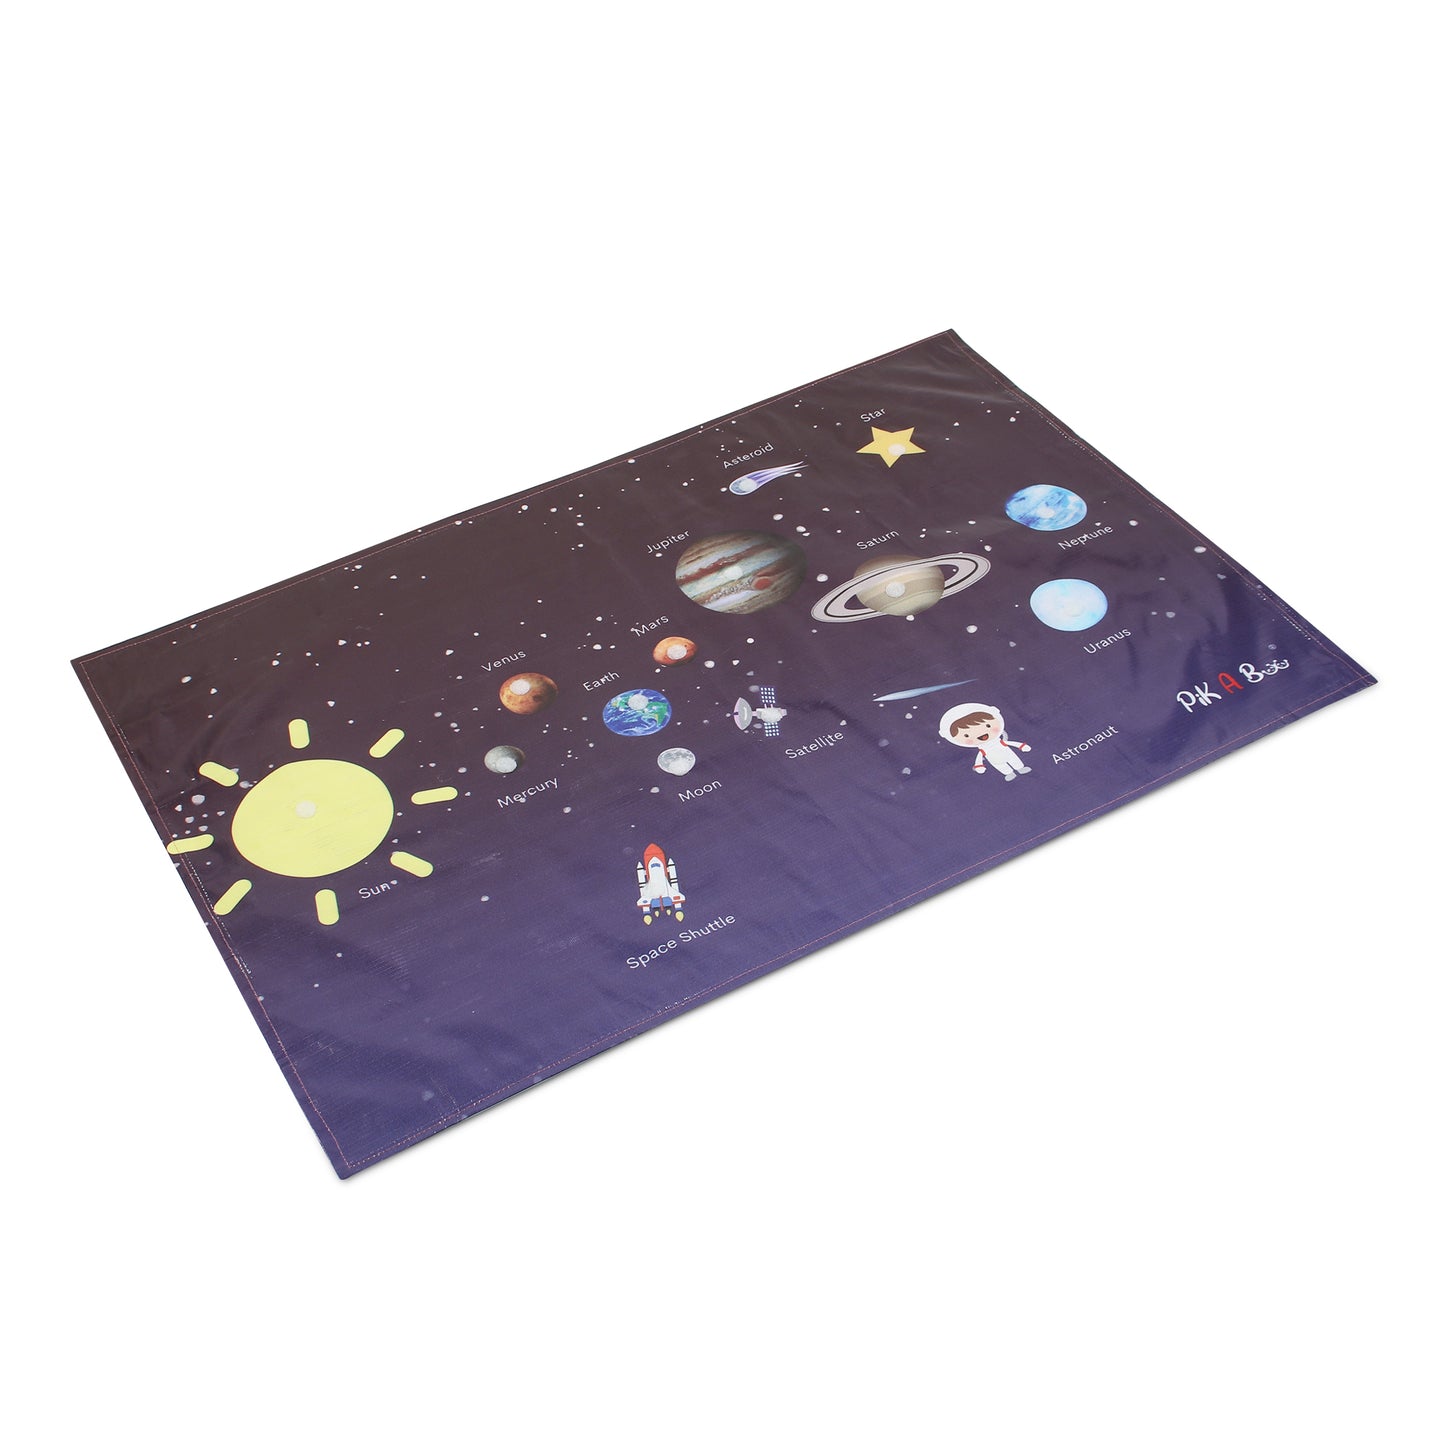 PiK A BOO Solar System Activity Mat For Kids, Children, Baby approx 91*60 cm